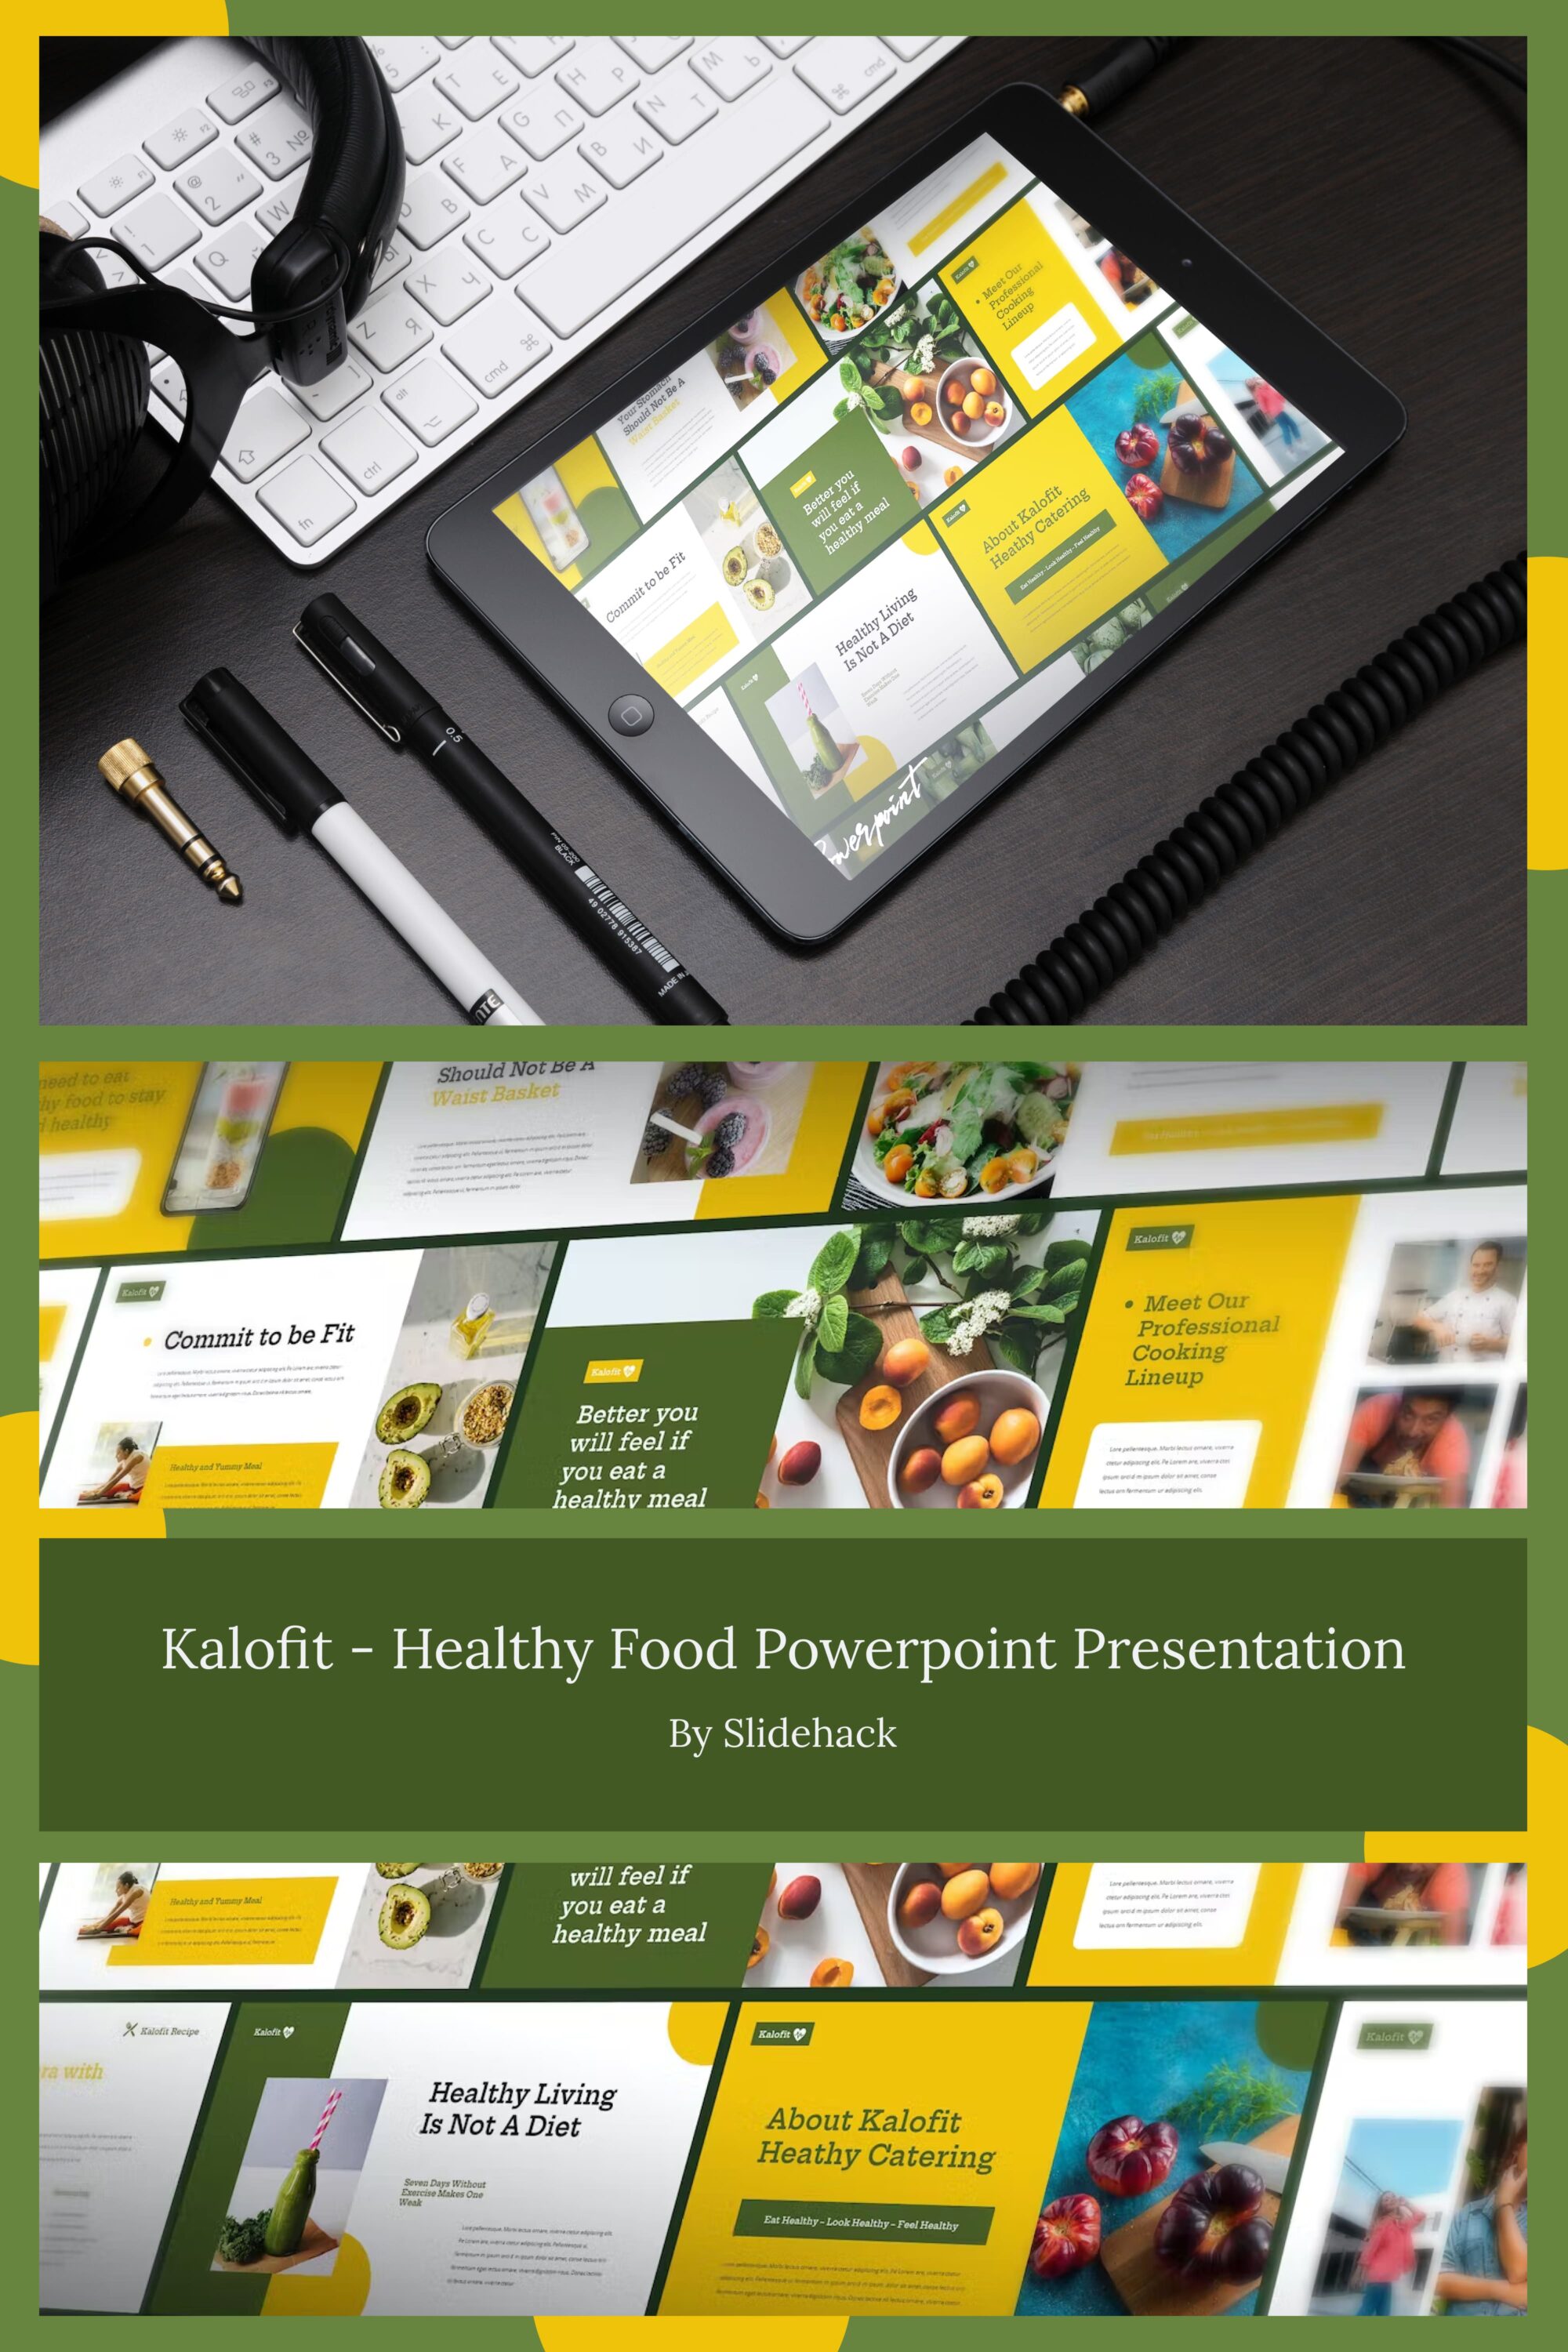 Kalofit Healthy Food Powerpoint Presentation - pinterest image preview.